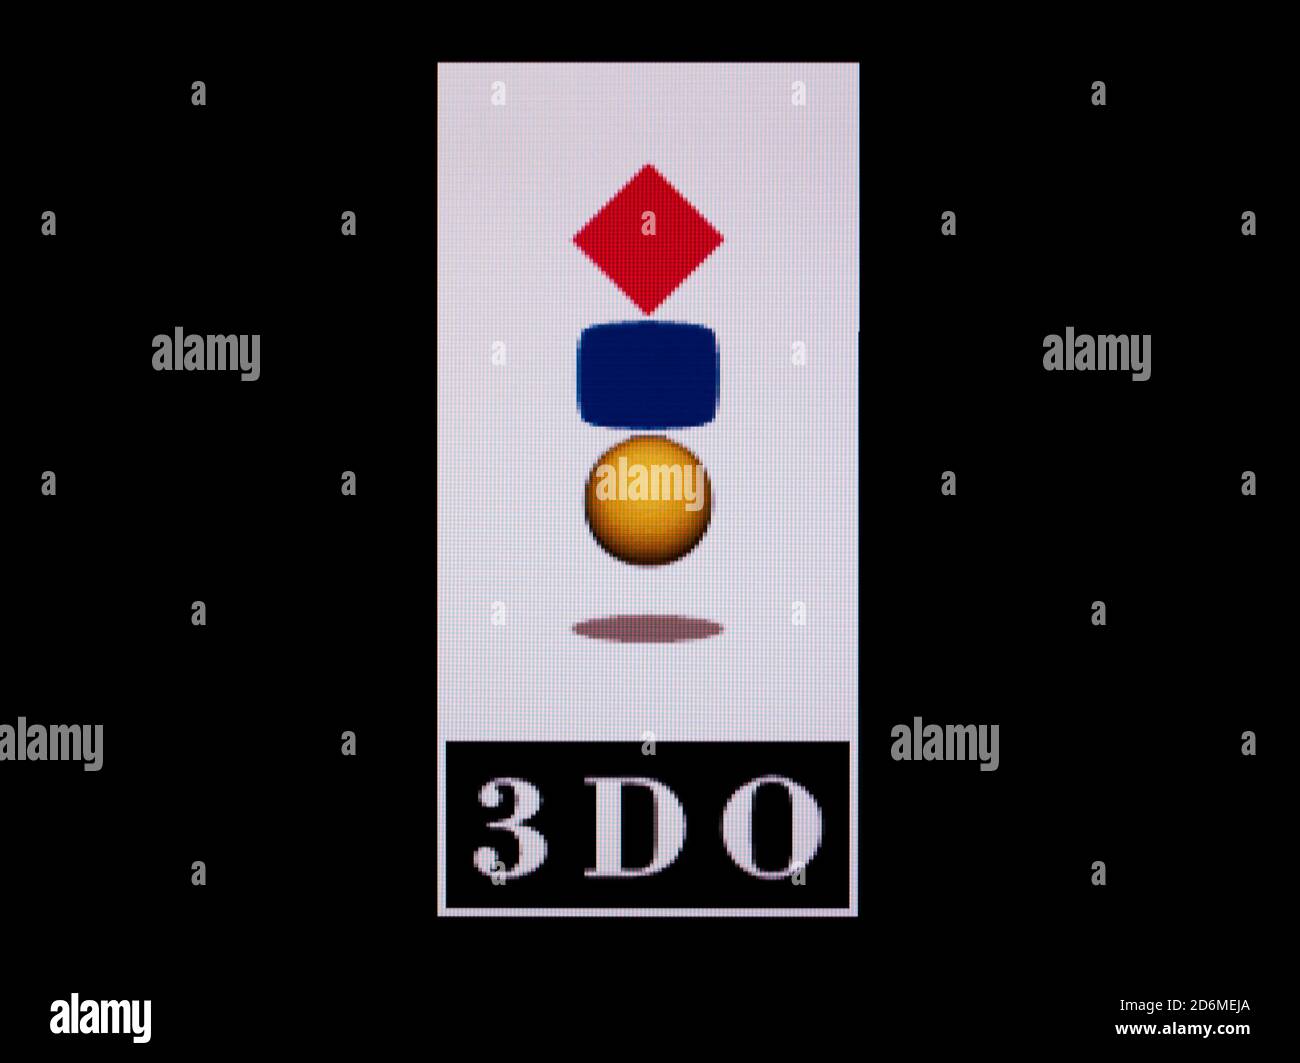 3DO Logo - 3DO Interactive Multiplayer Videogame - Editorial Use Only Stock Photo